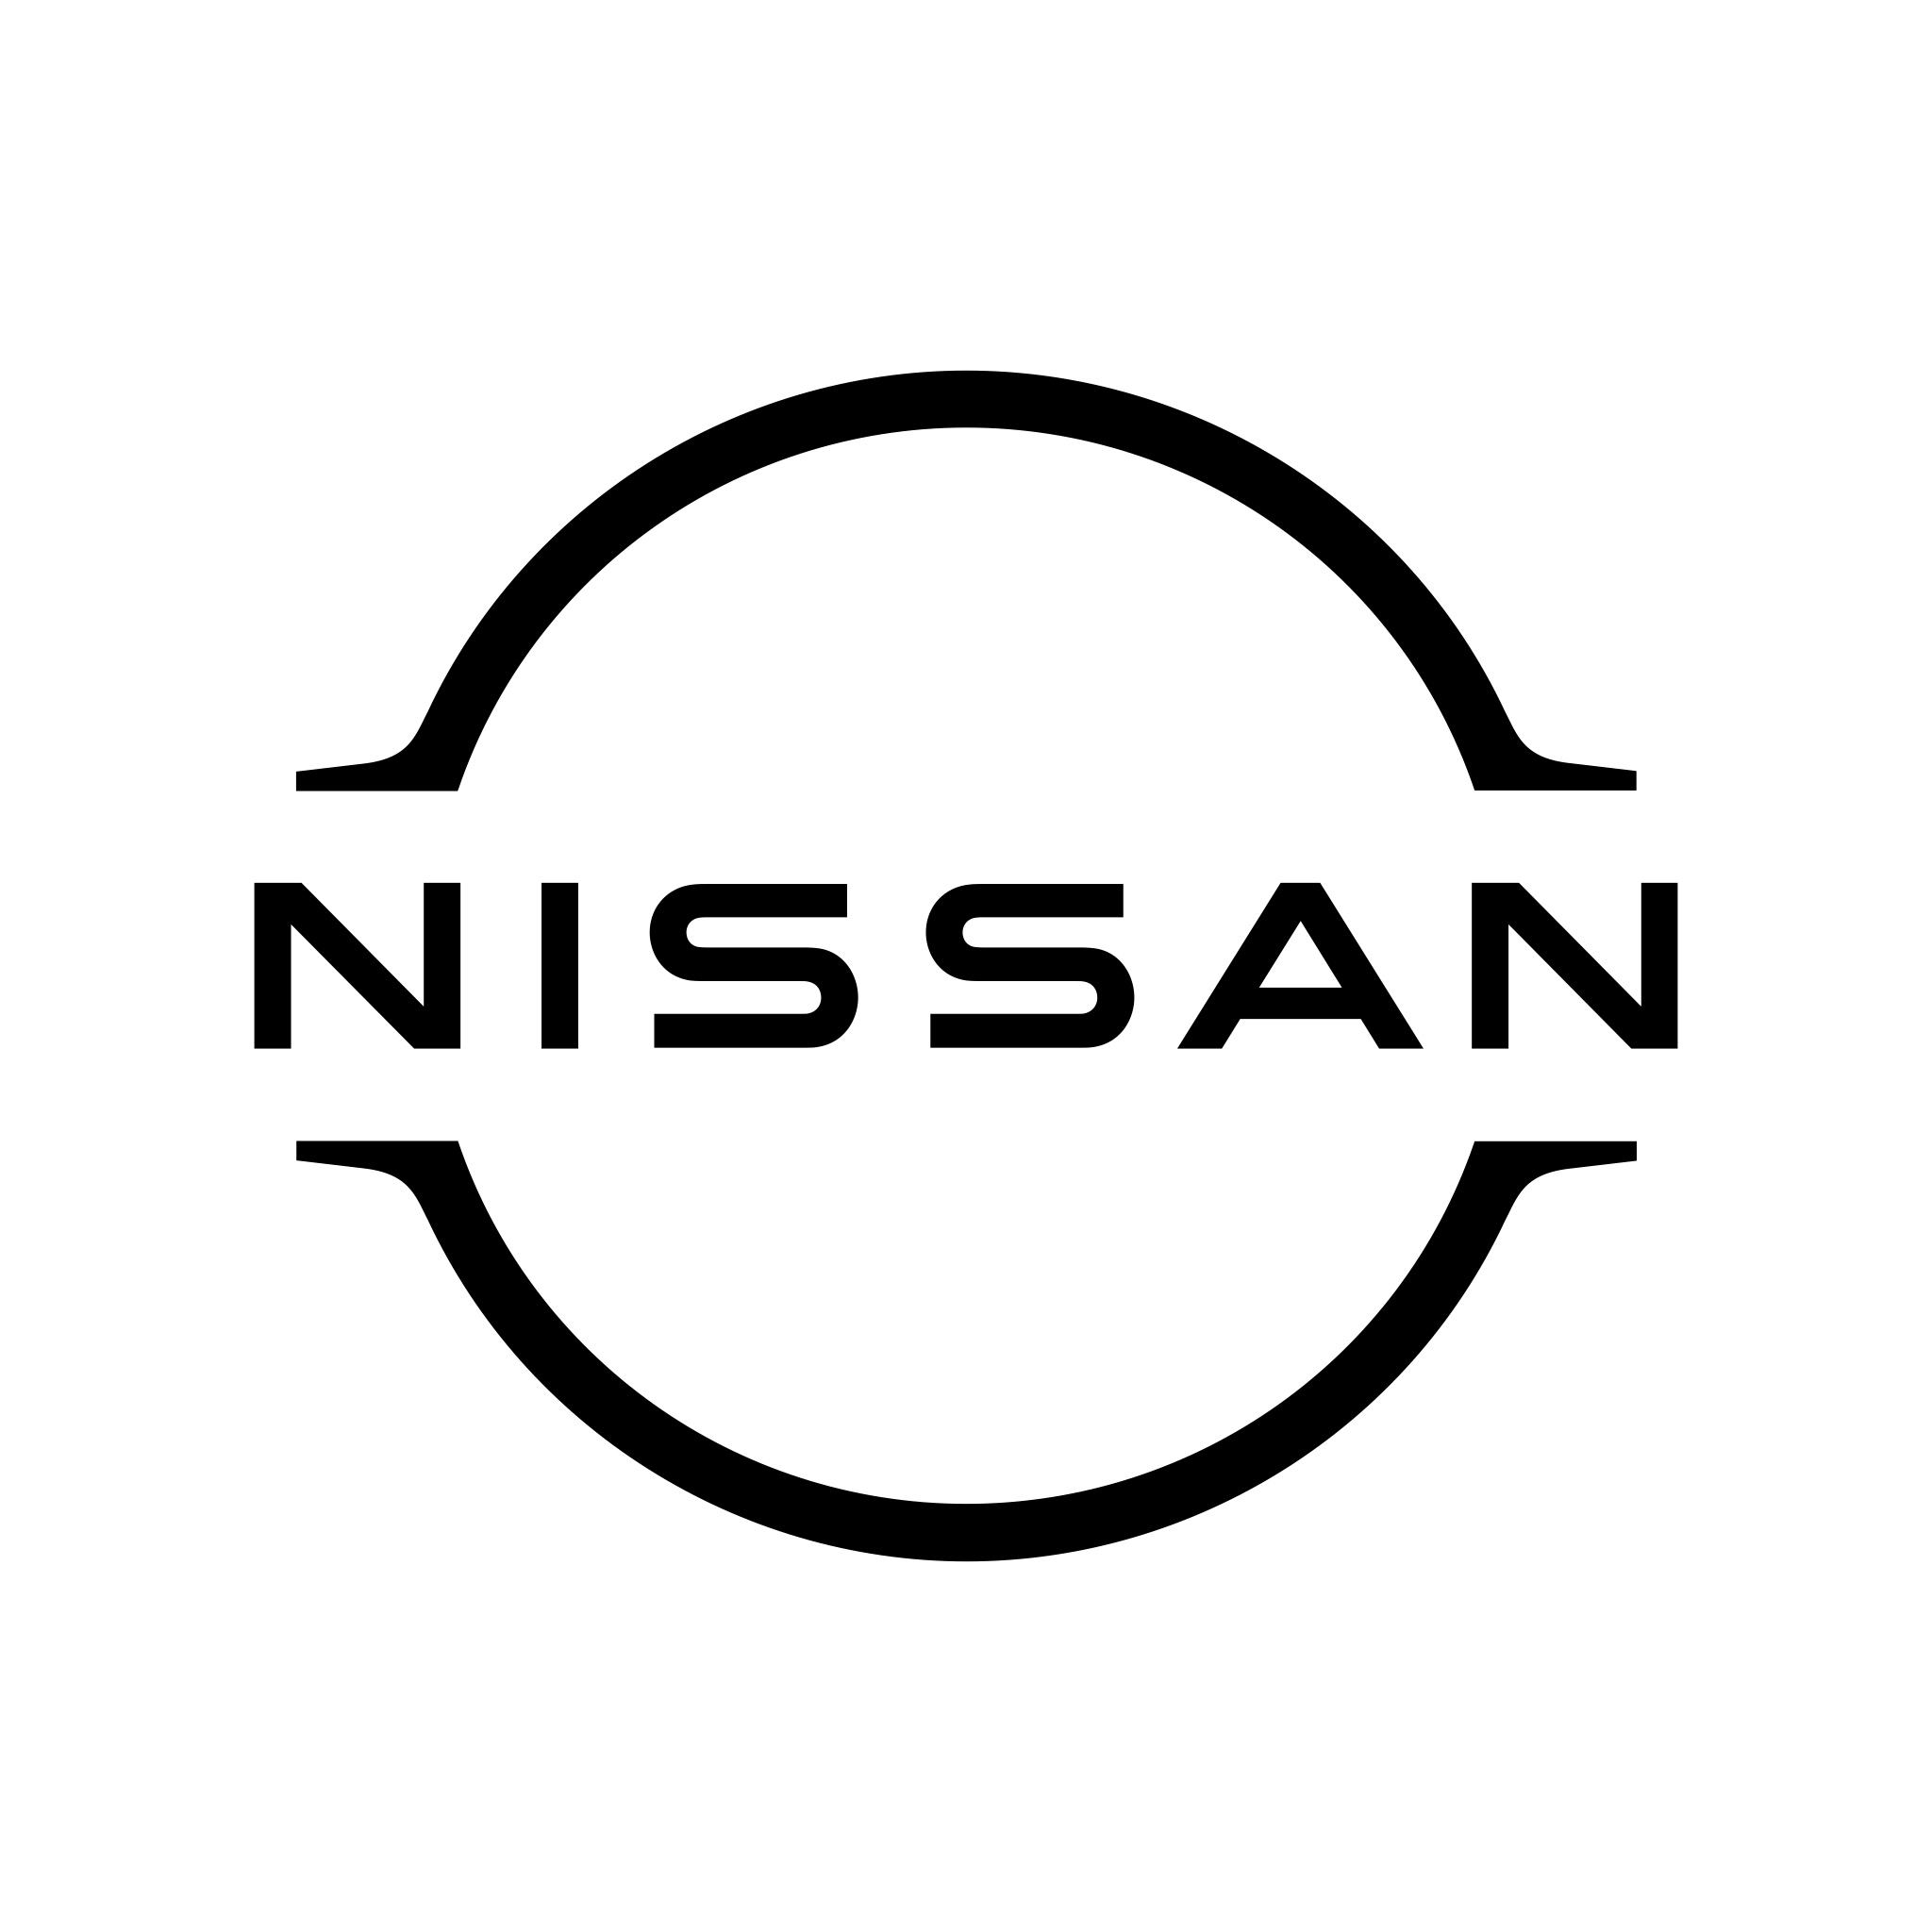 Logo de Nissan SVG